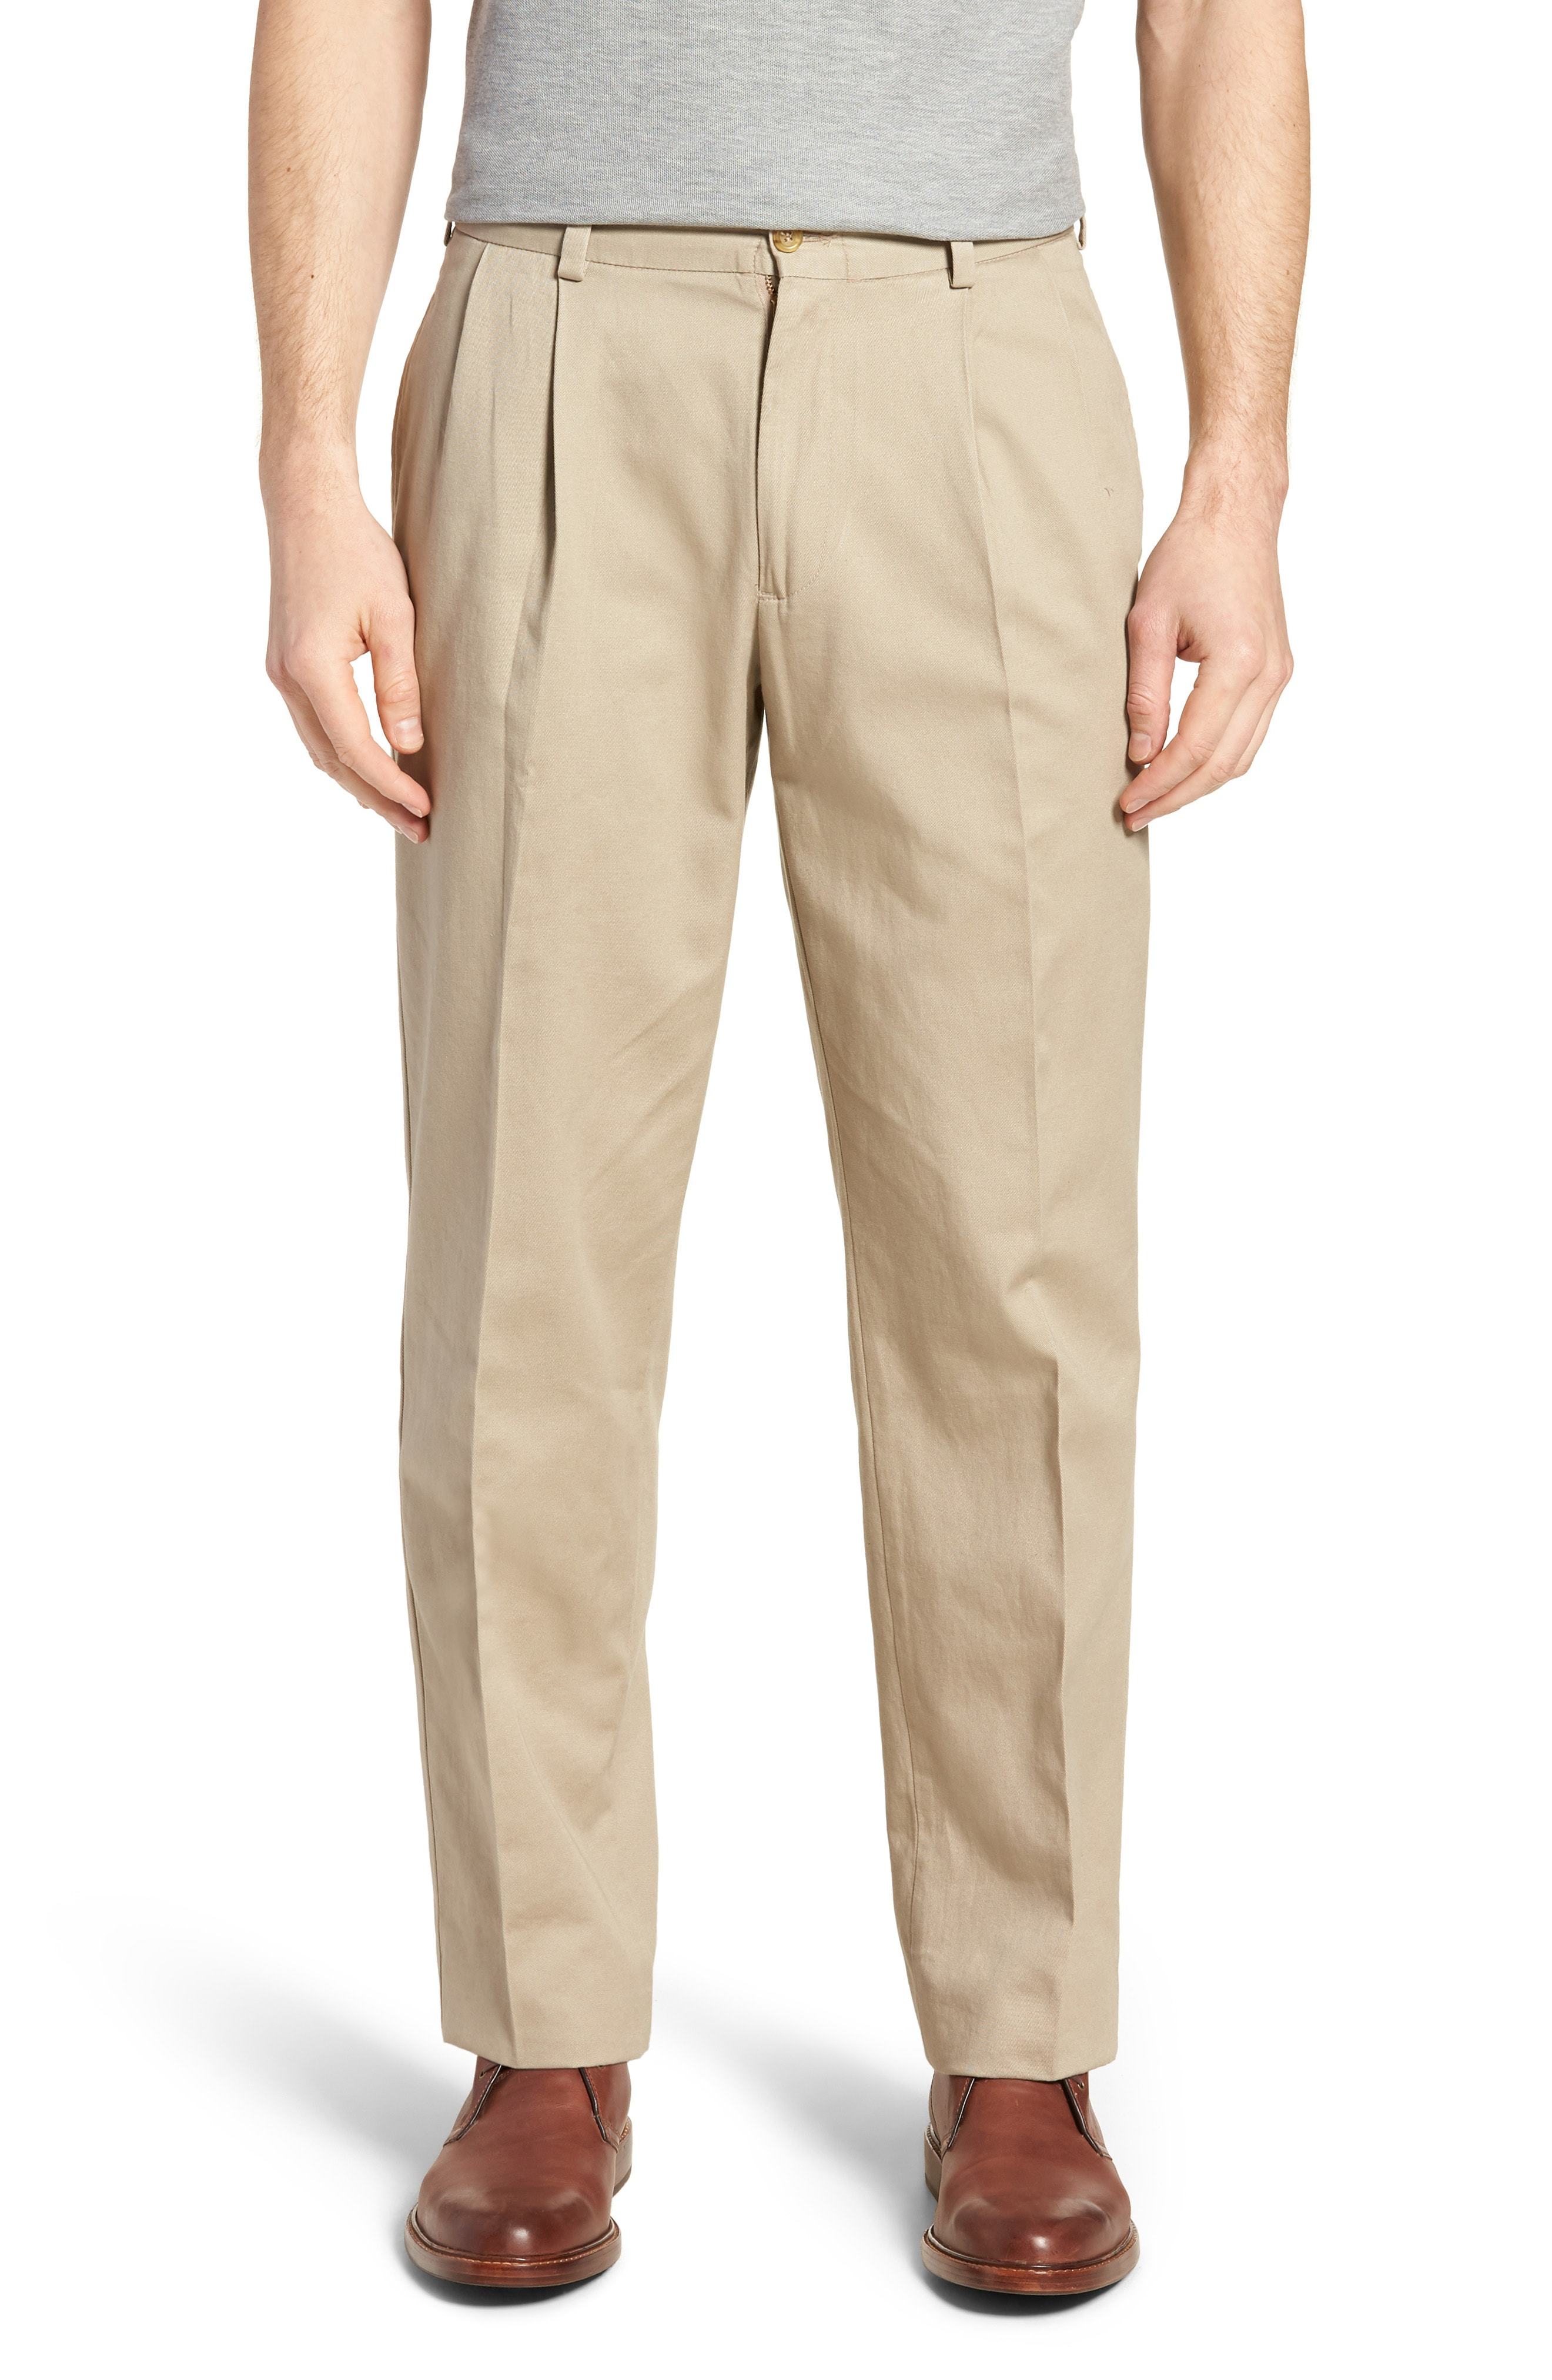 Bills Khakis M2 Classic Fit Pleated Vintage Twill Pants, $155